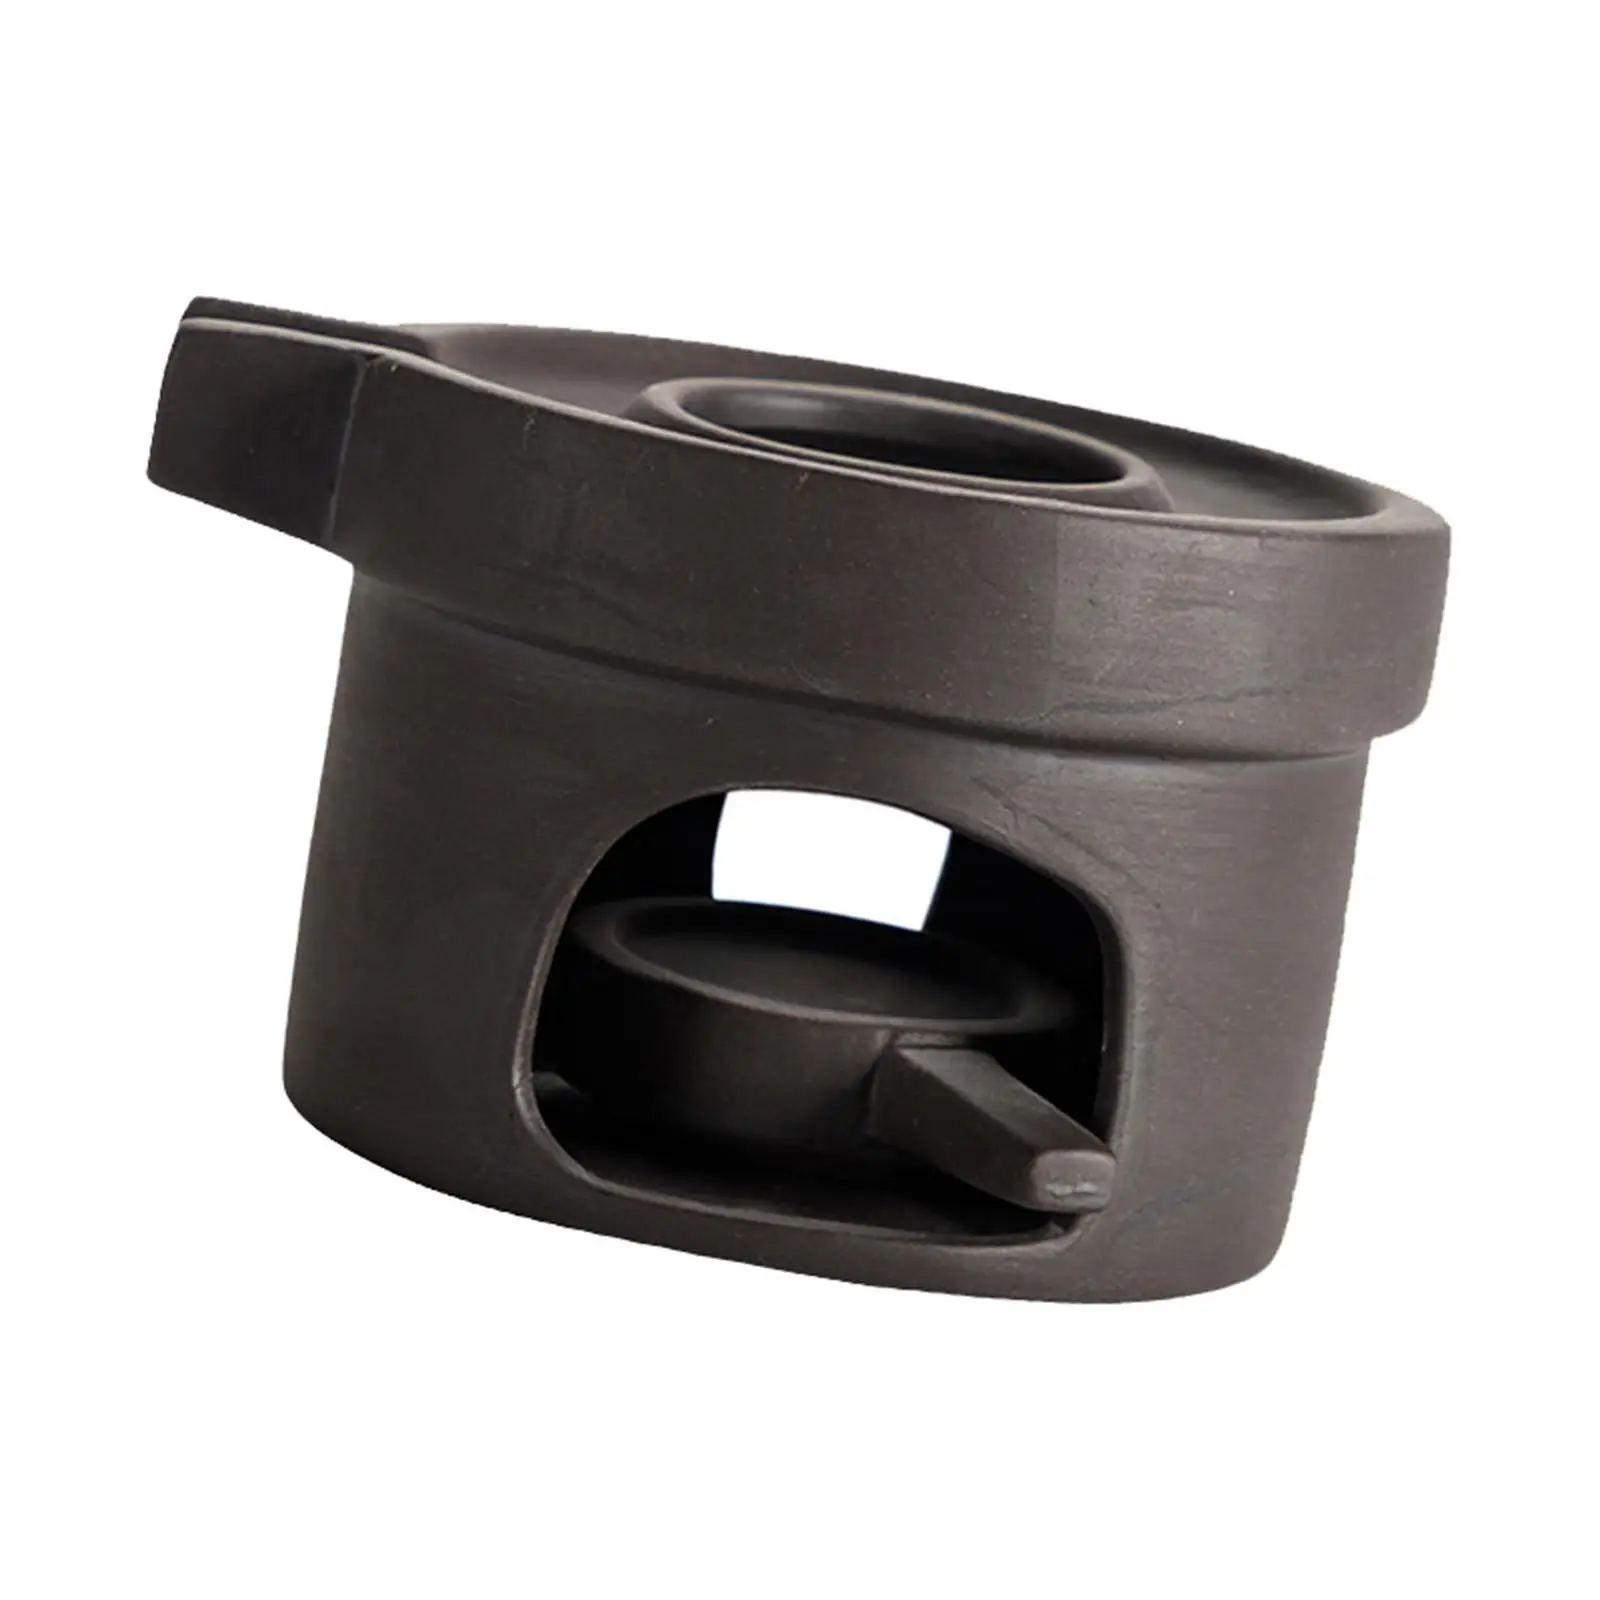 Retro Tea Teapot Warmer Tealight Furnace for Heating Coffee, Milk or Tea